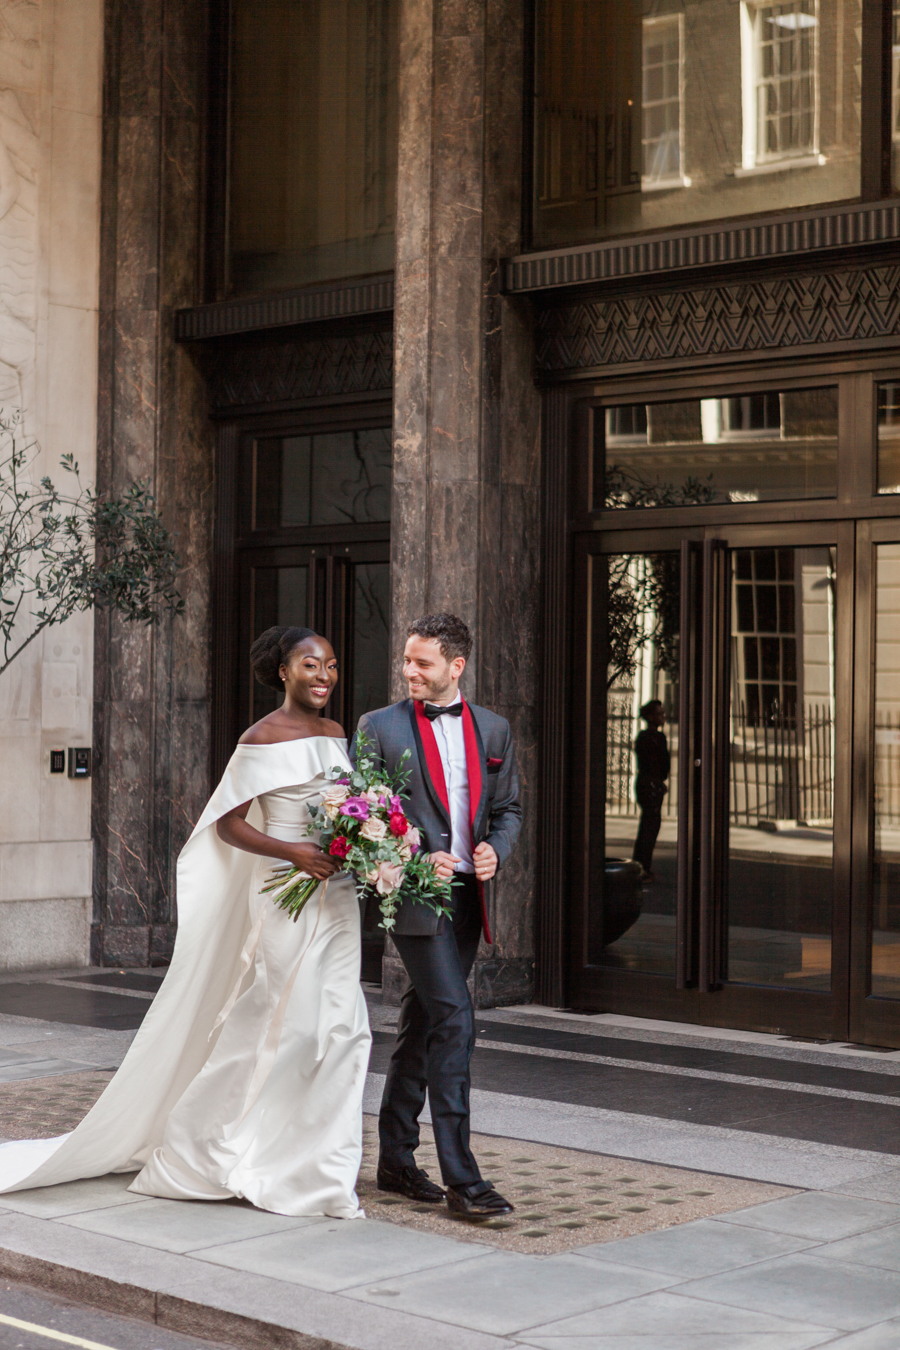 Breathtakingly beautiful - diversity wins in this stunning RSA London wedding editorial! (3)